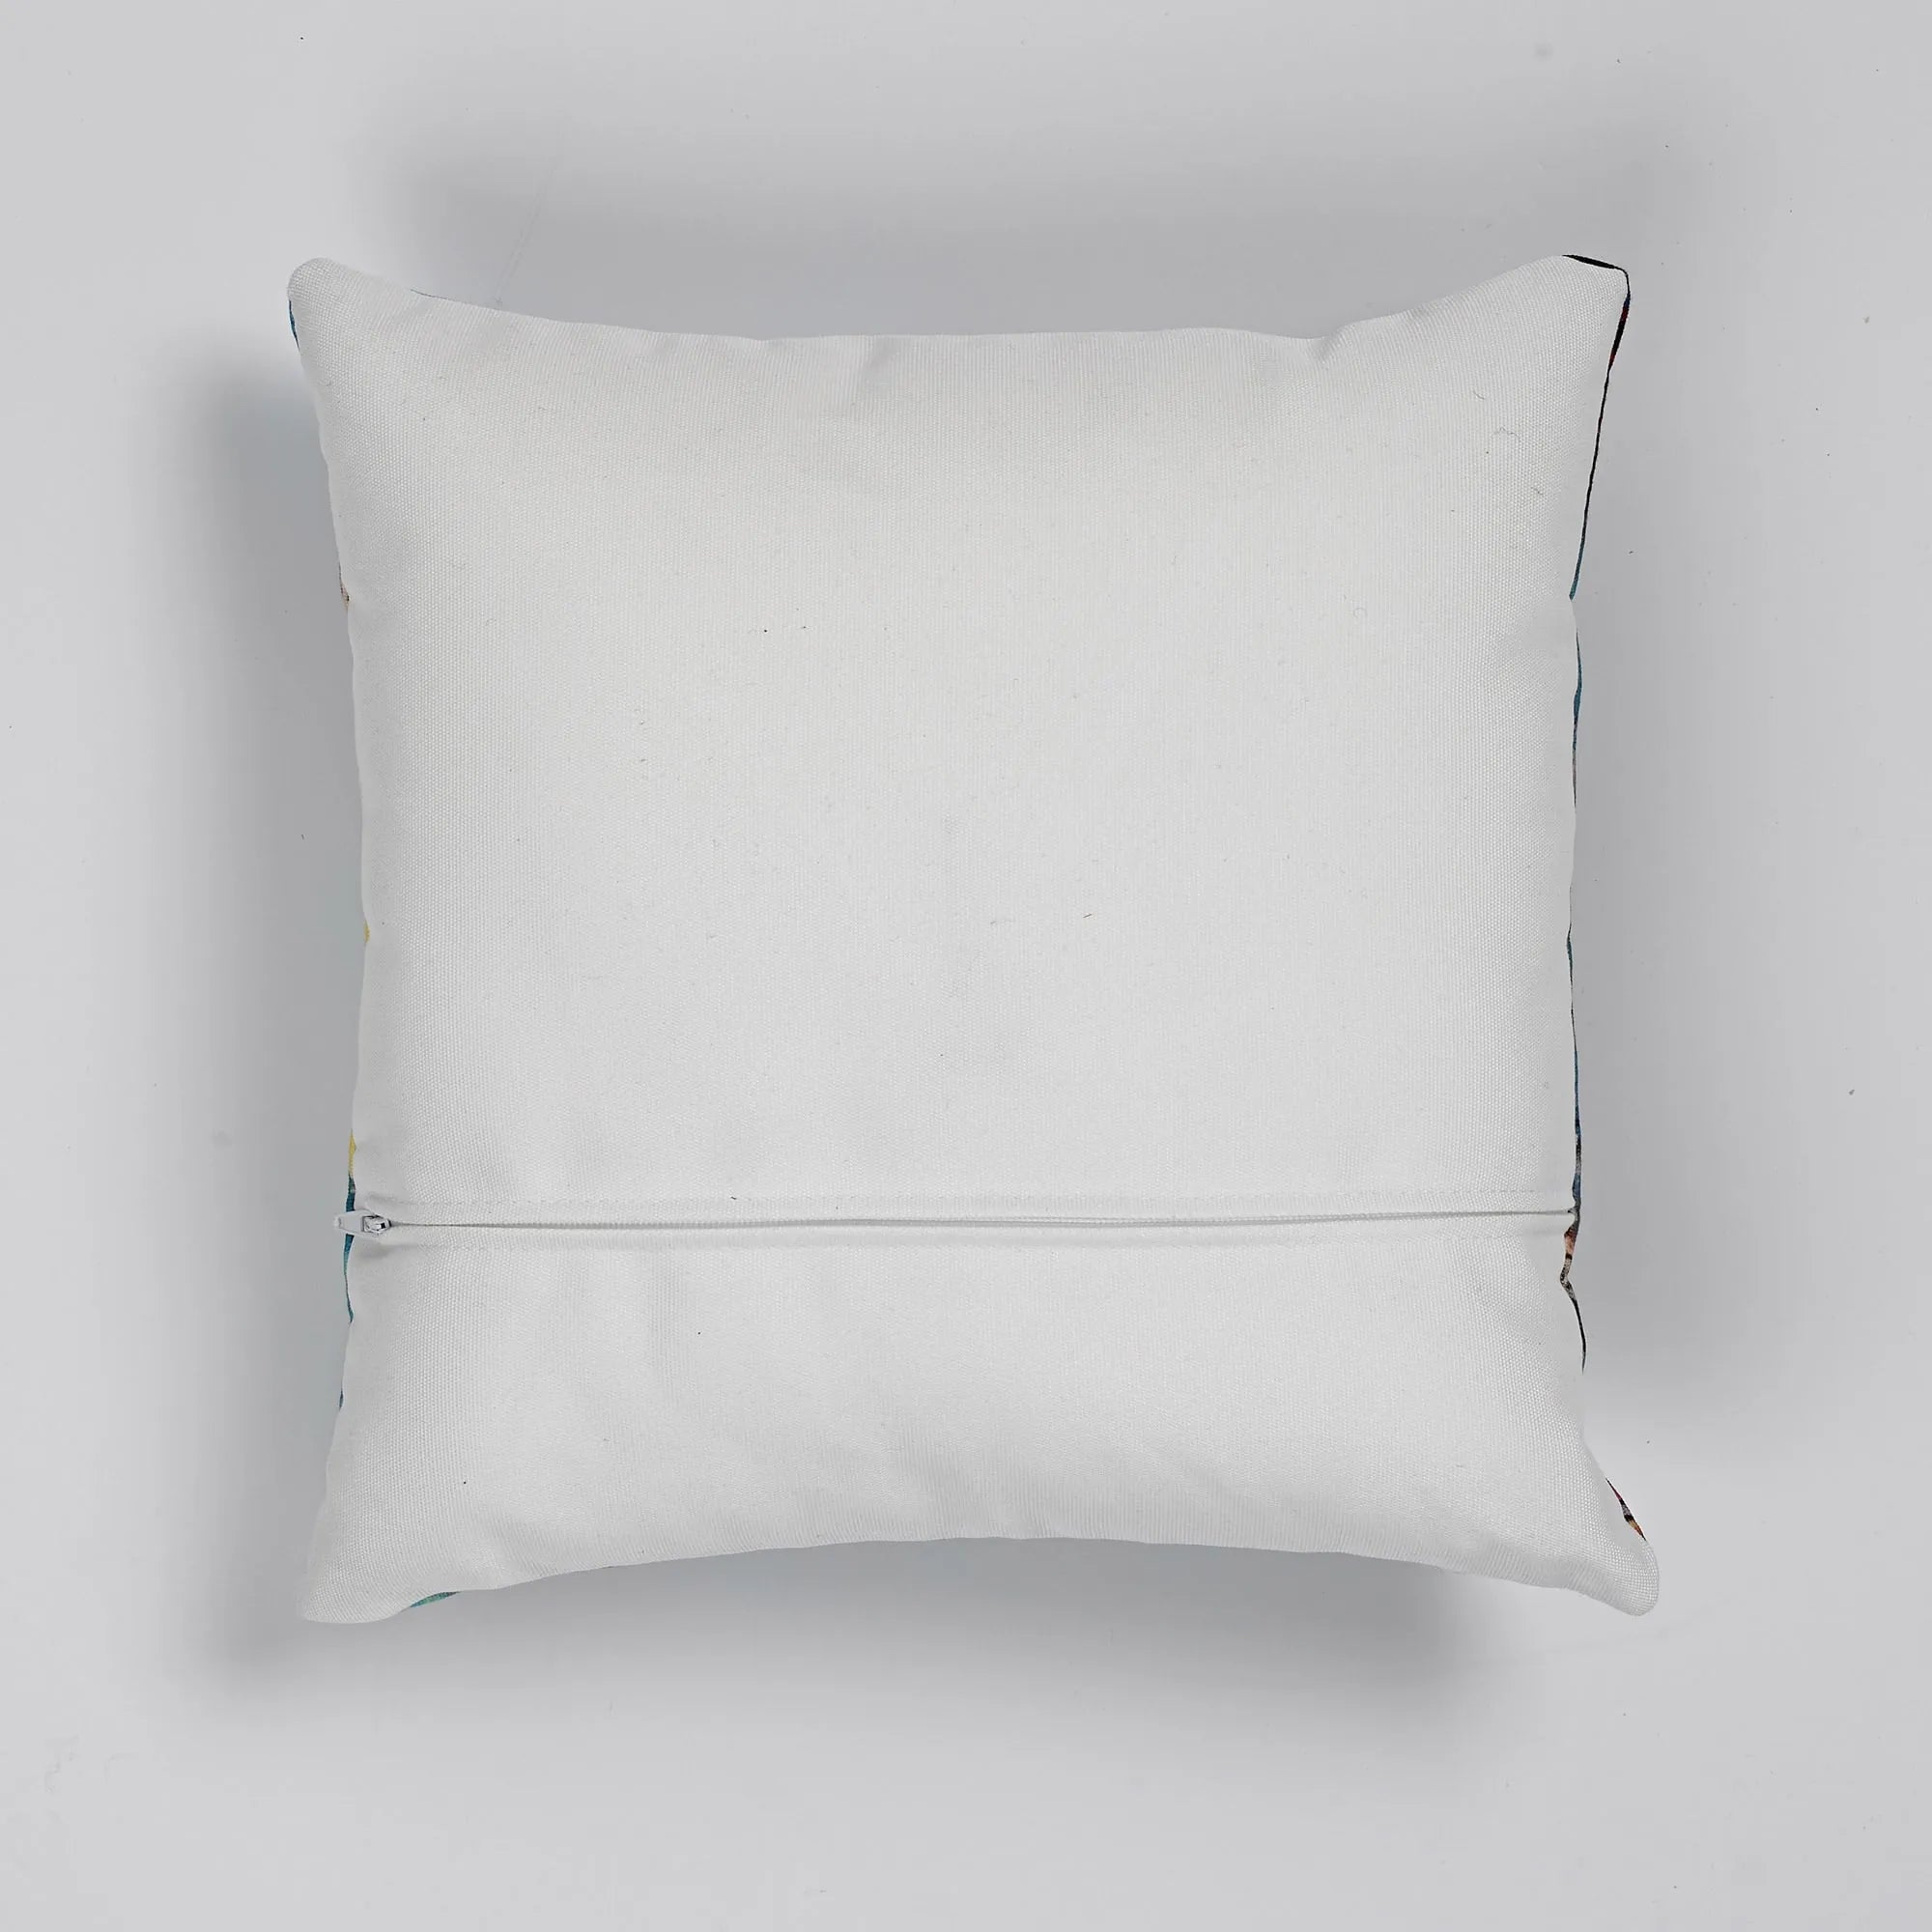 Aigles Et Pigeons - Maurice Pillard Verneuil Cushion - Decorative Throw Pillow - Throw Pillows - Aesthetic Art